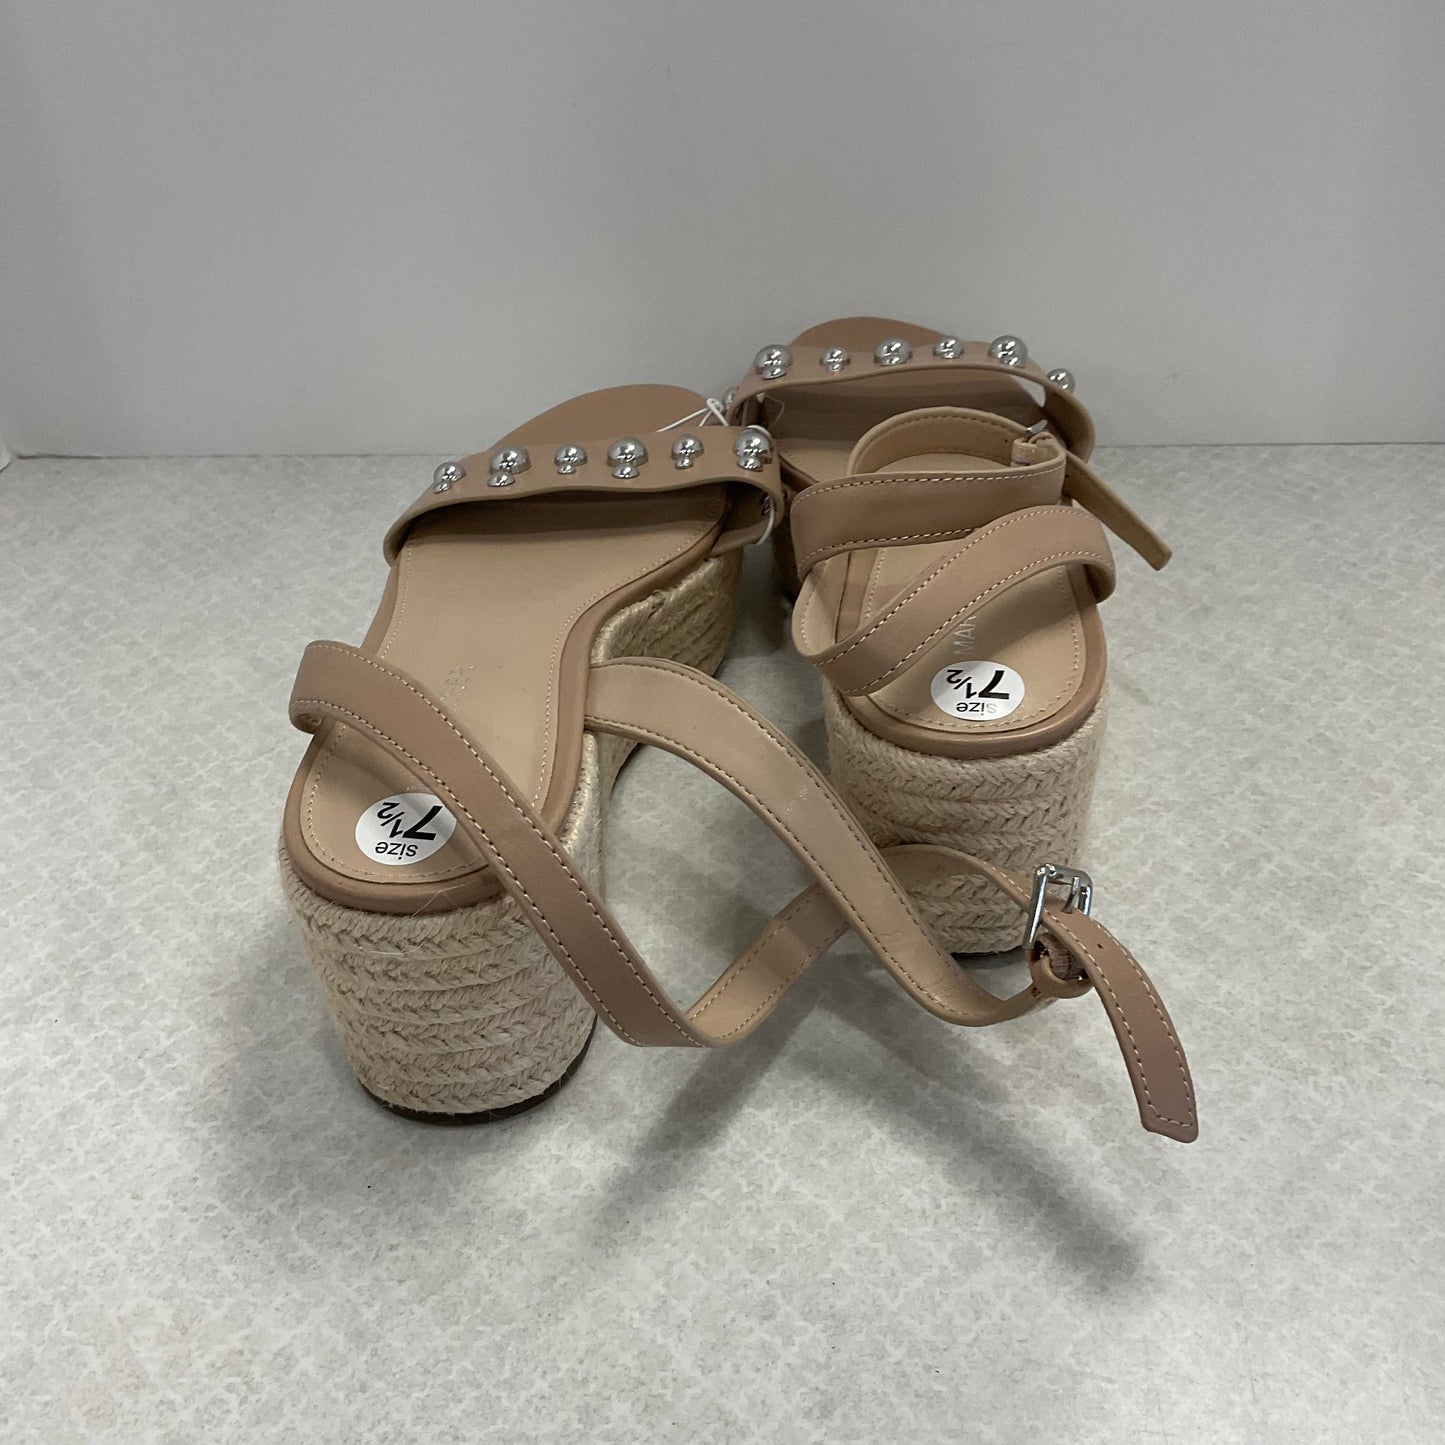 Sandals Heels Platform By Marc Fisher  Size: 7.5